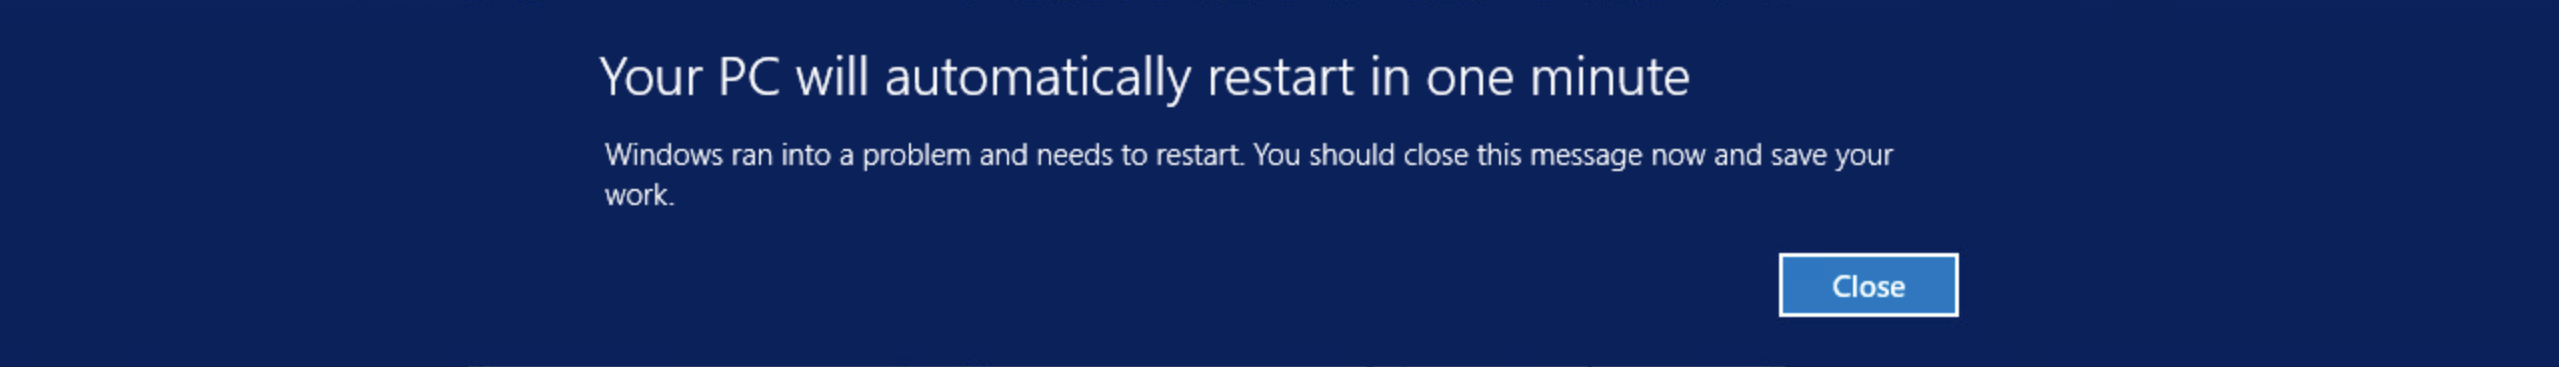 Windows Server reboot notification